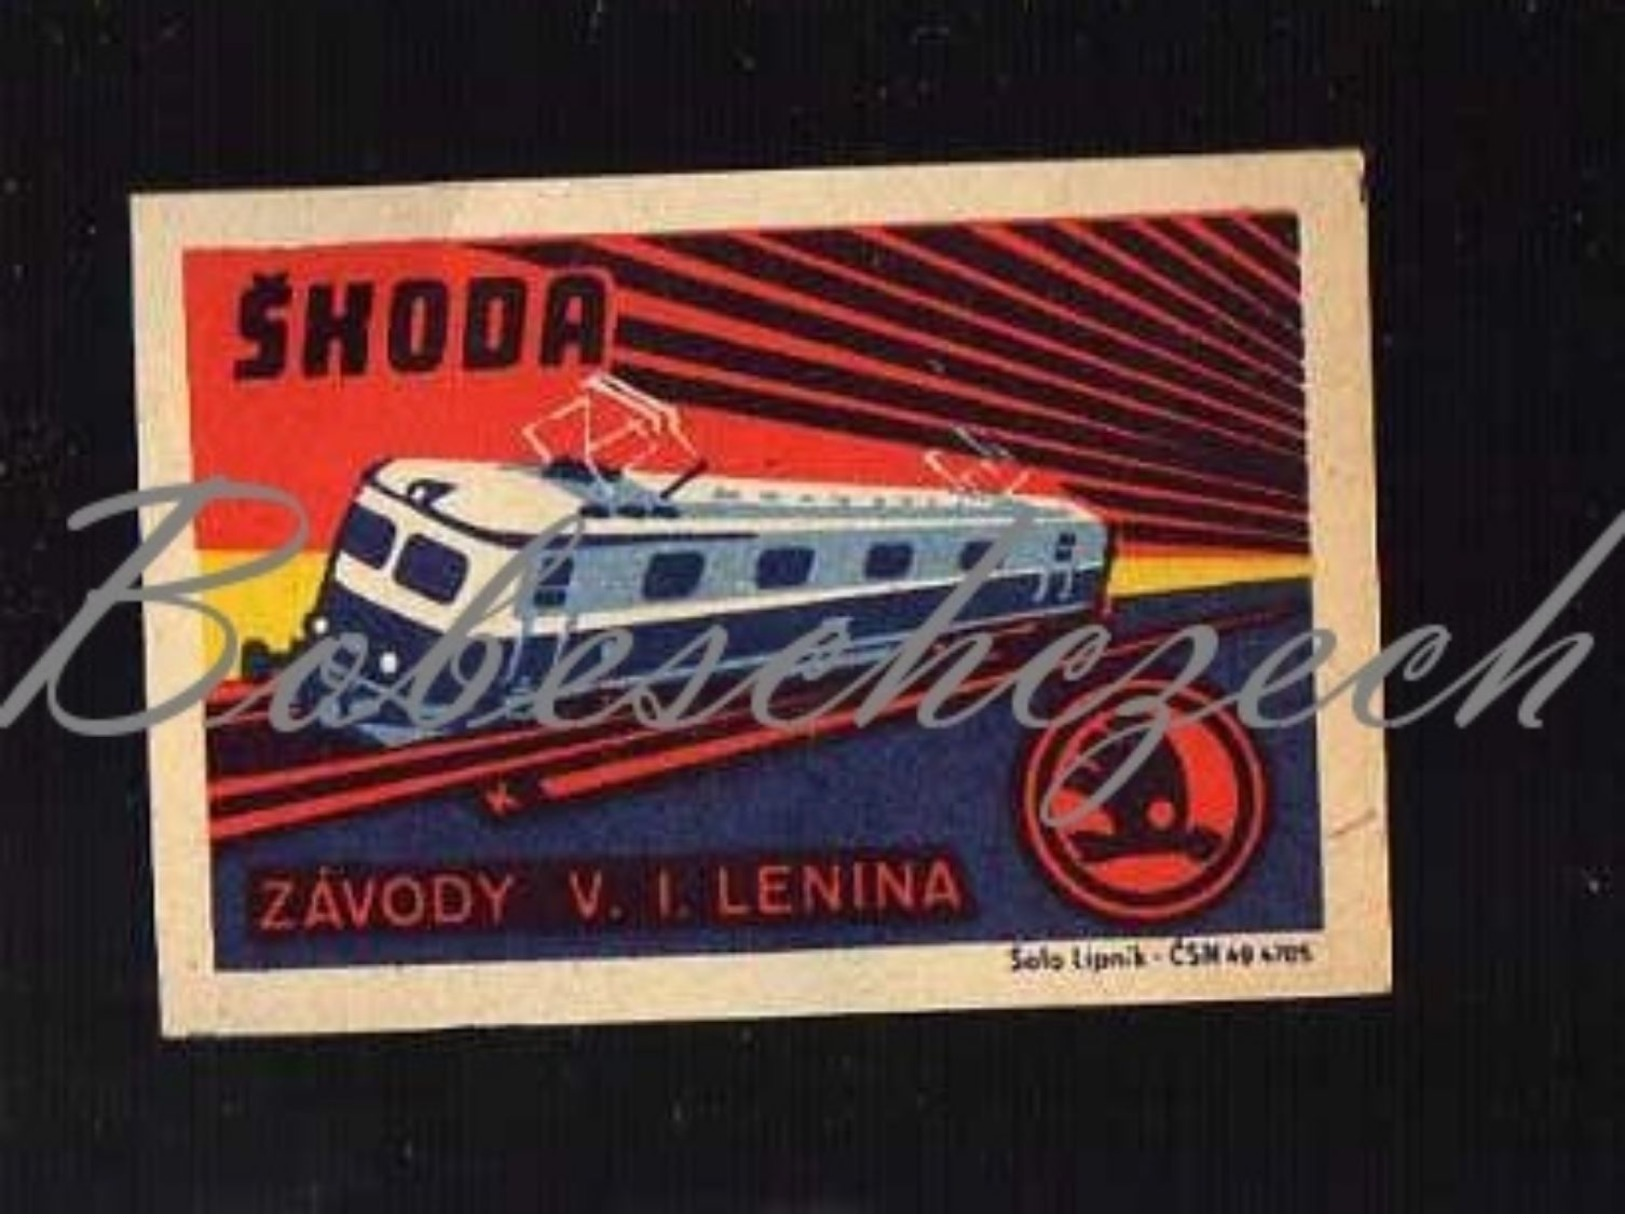 56-8 CZECHOSLOVAKIA 1961 Skoda Works Pilsen-V.I. Lenin Factory Engineering  Diesel-electric Locomotive - Matchbox Labels